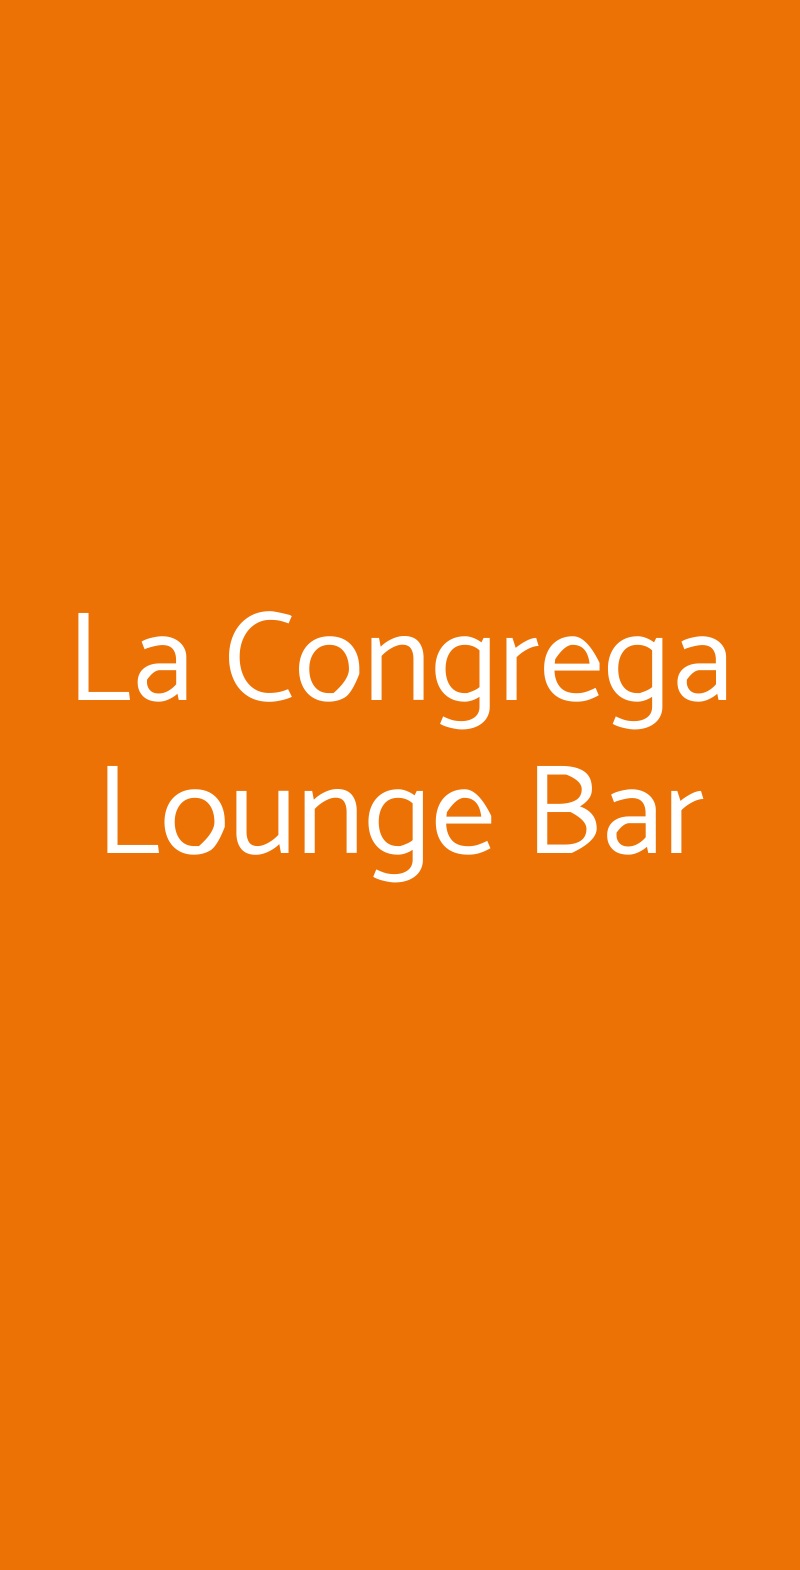 La Congrega Lounge Bar Firenze menù 1 pagina